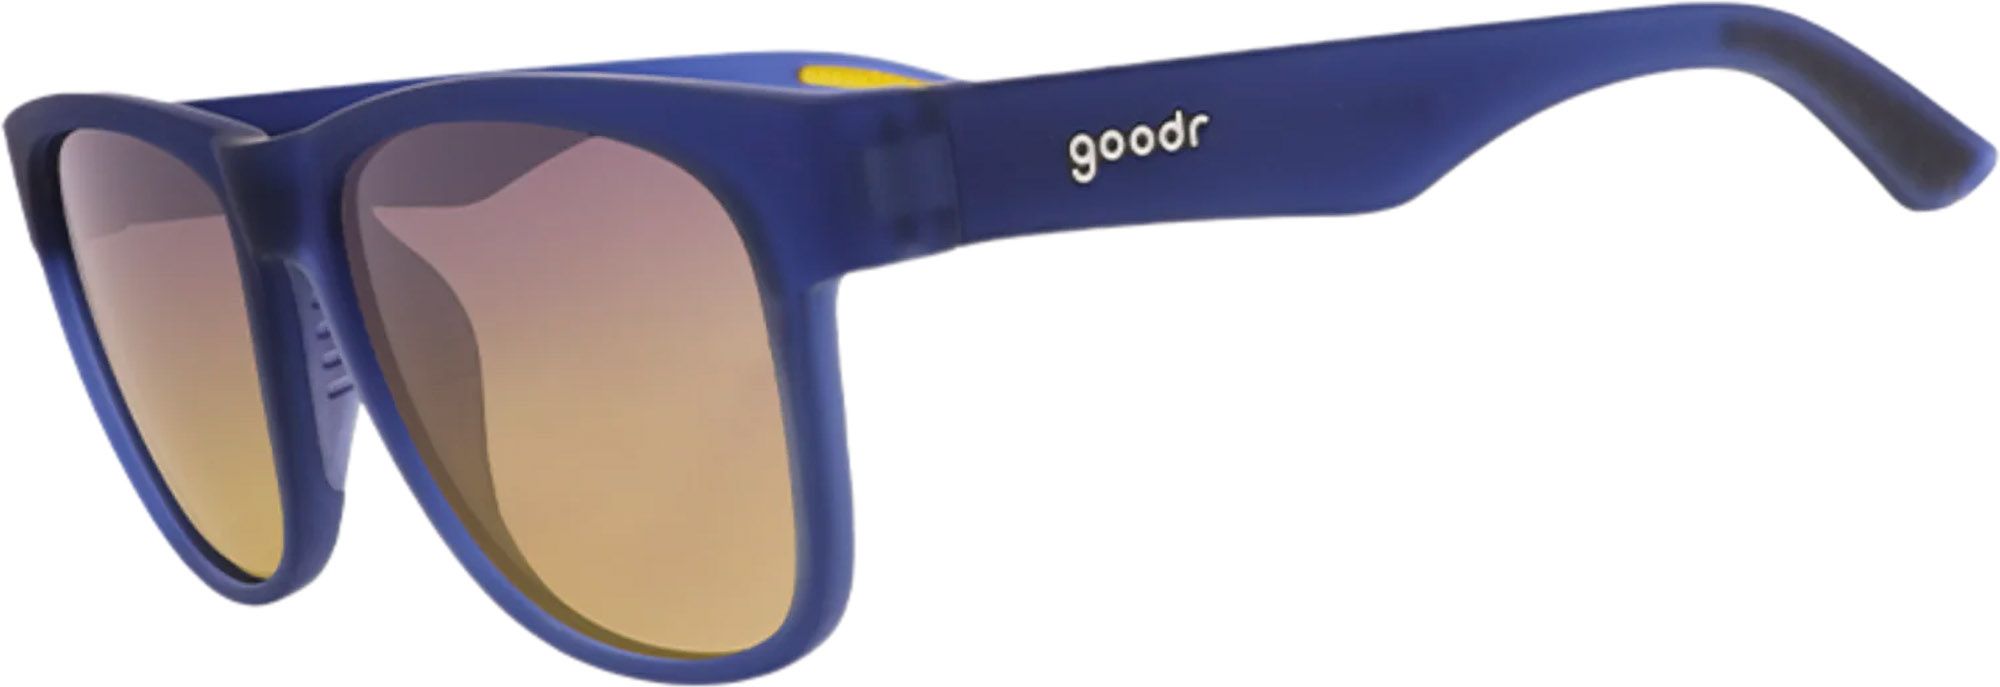 Photos - Sunglasses Goodr Electric Beluga Boogaloo Polarized , Men's 24AVJALCTRCBLGB